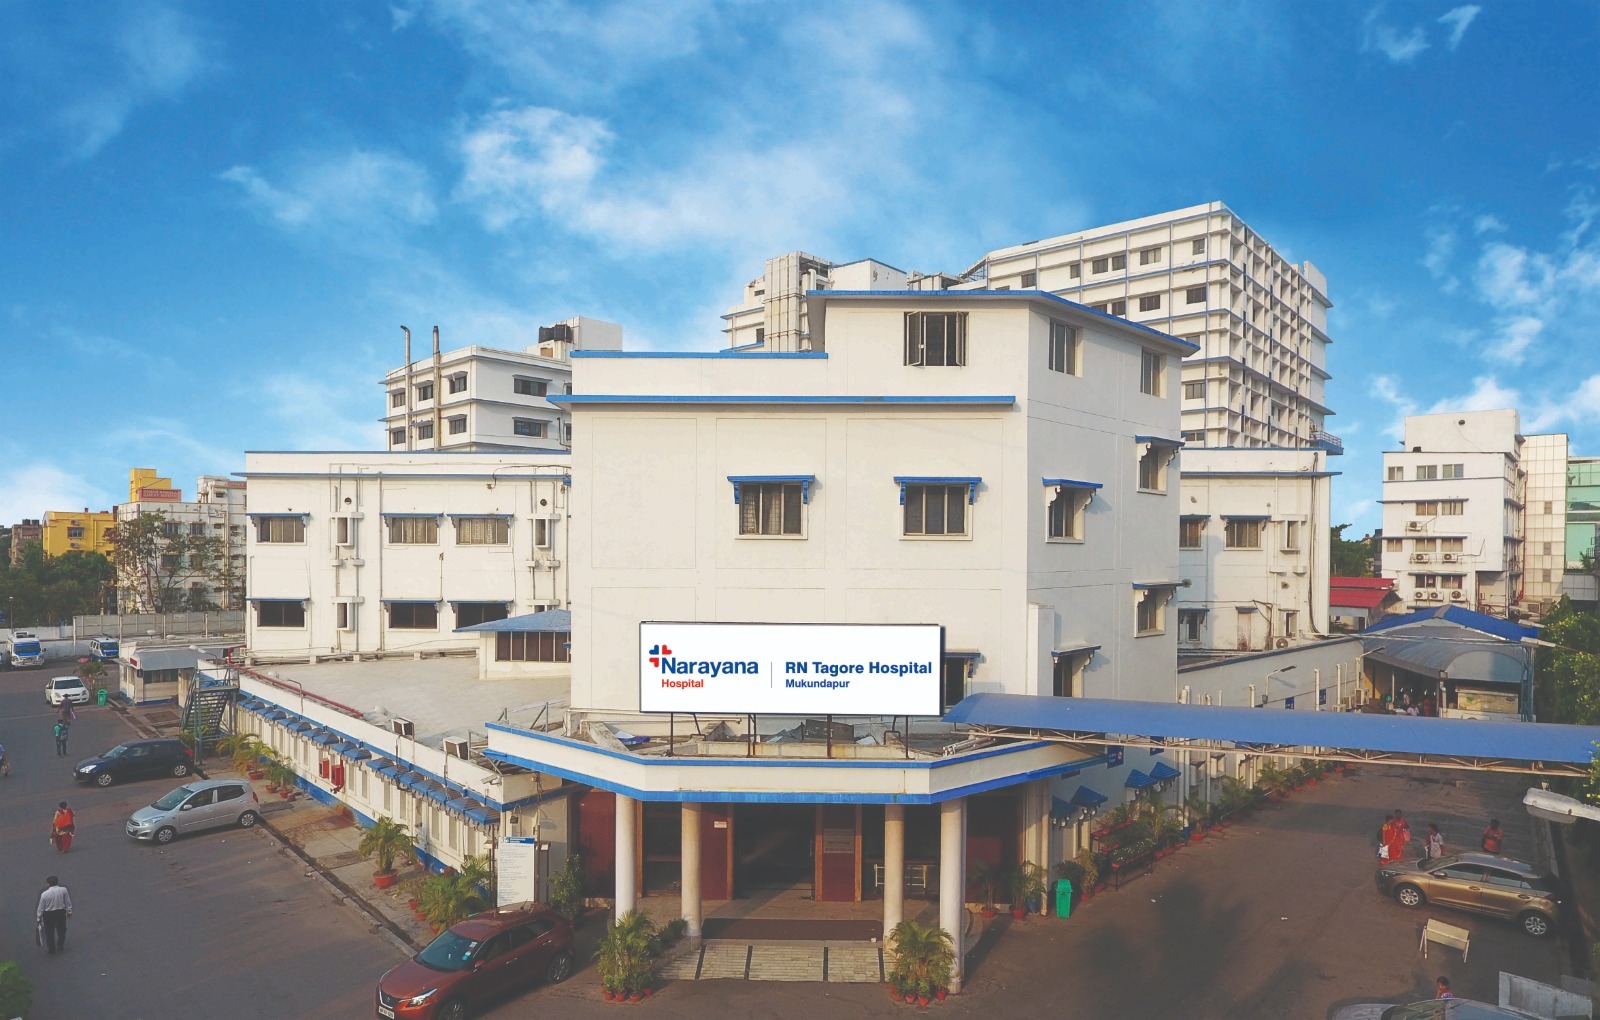 Narayana Hospital RN Tagore Hospital